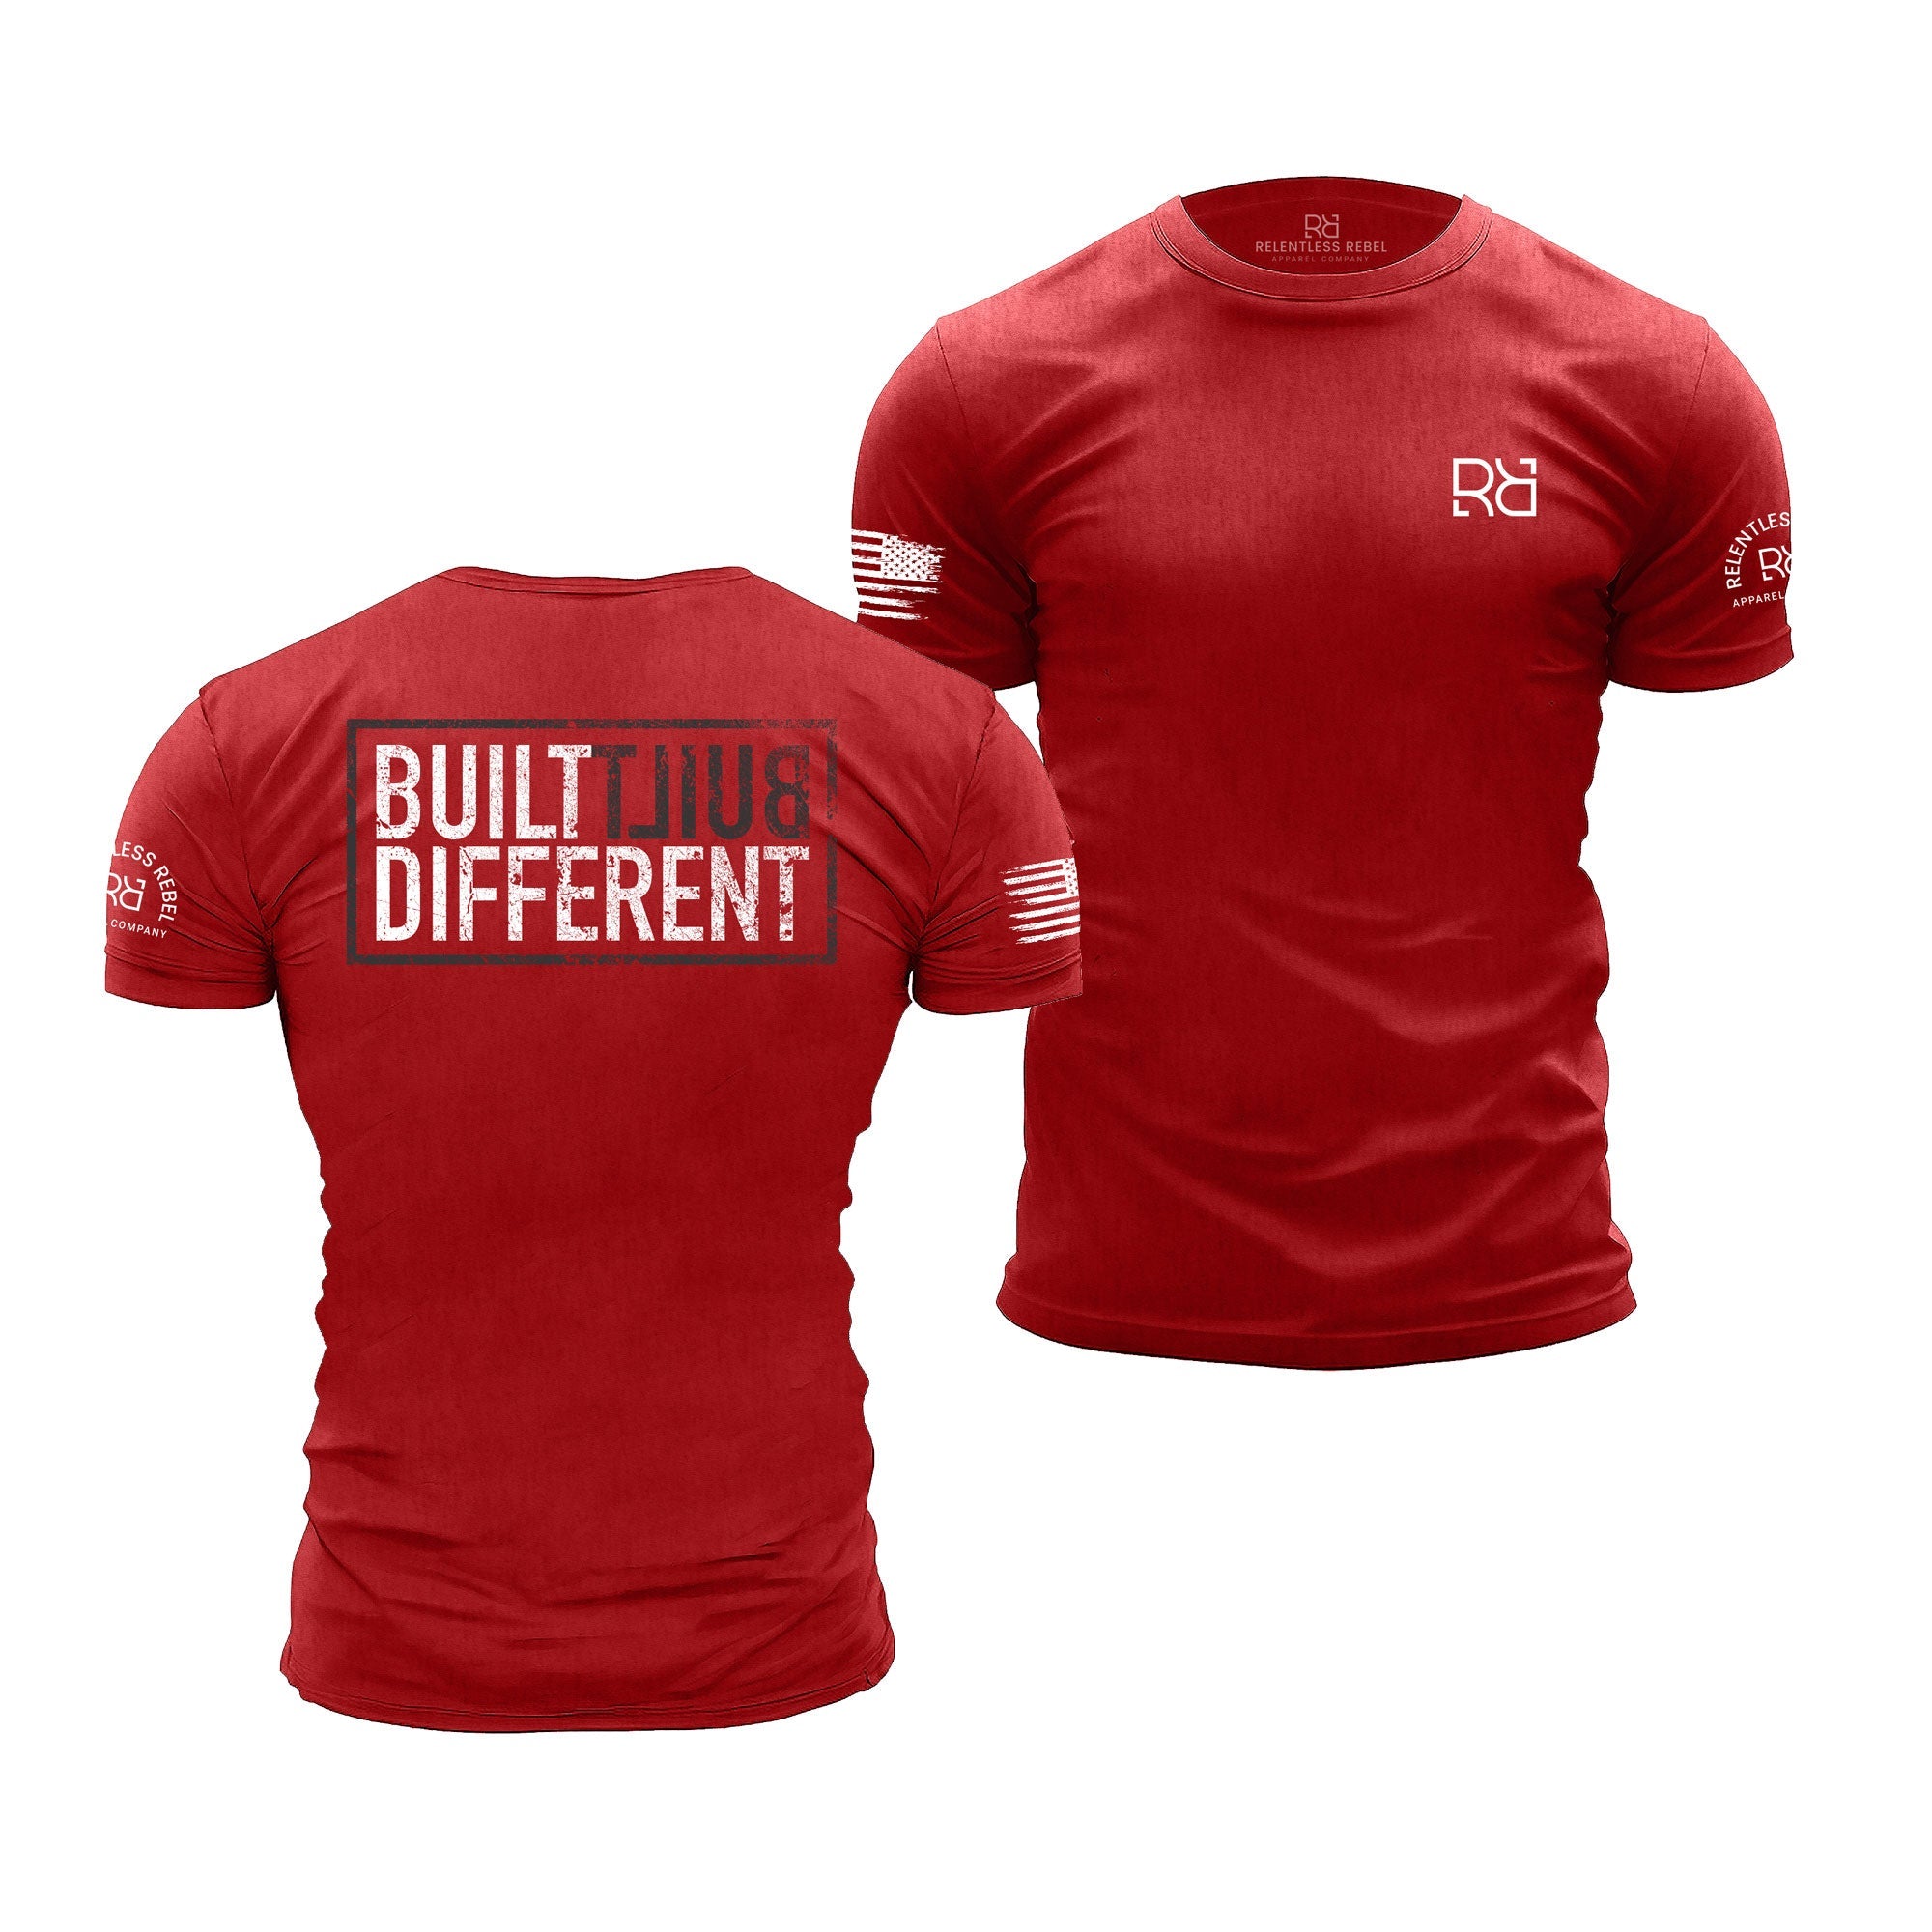 Red Built Different t-shirt